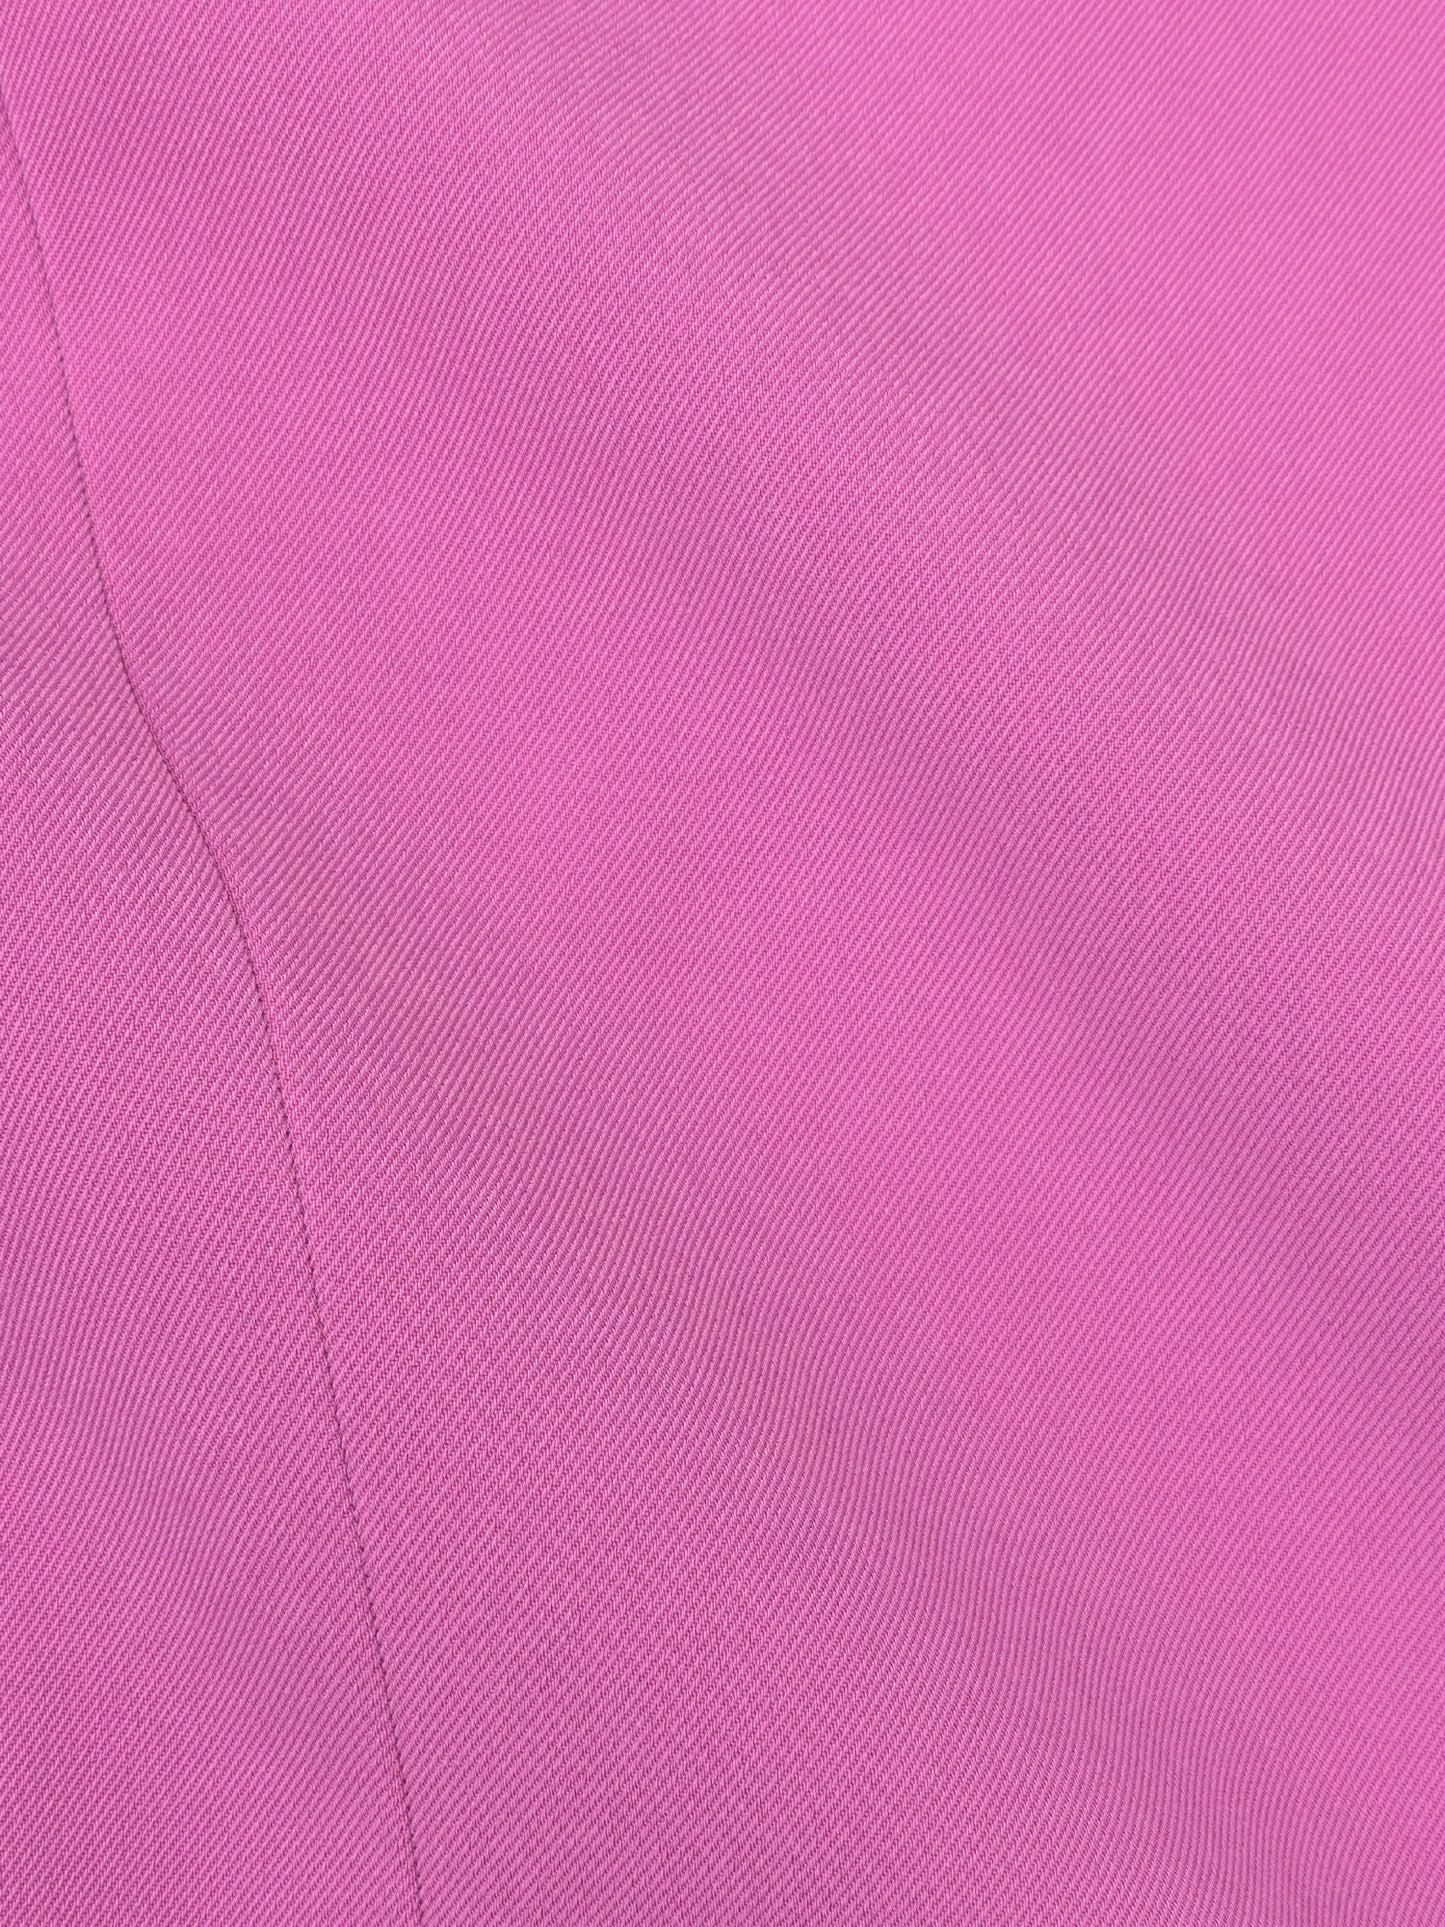 Short maud pink purple